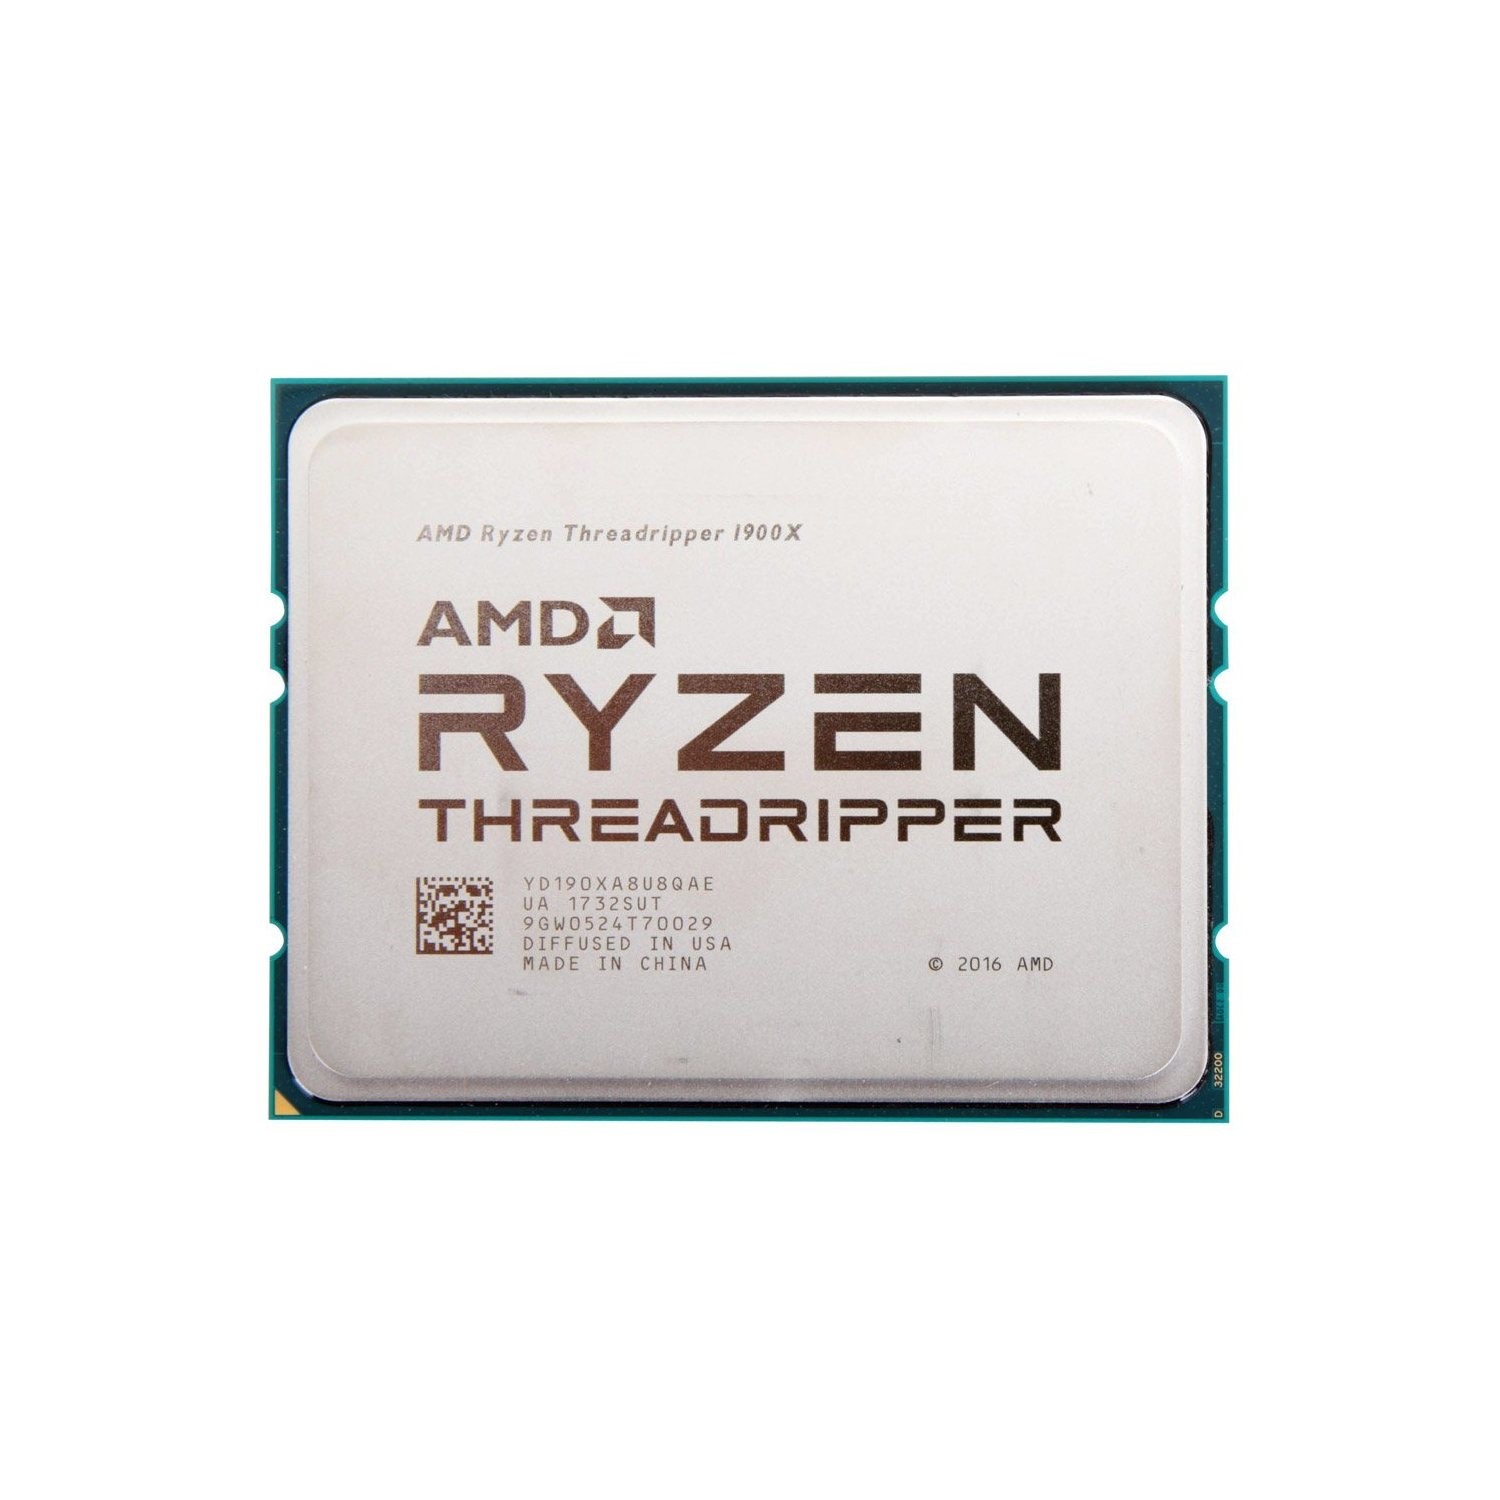 AMD Ryzen Threadripper 1900X Socket TR4 3.8Ghz Zen Processor 